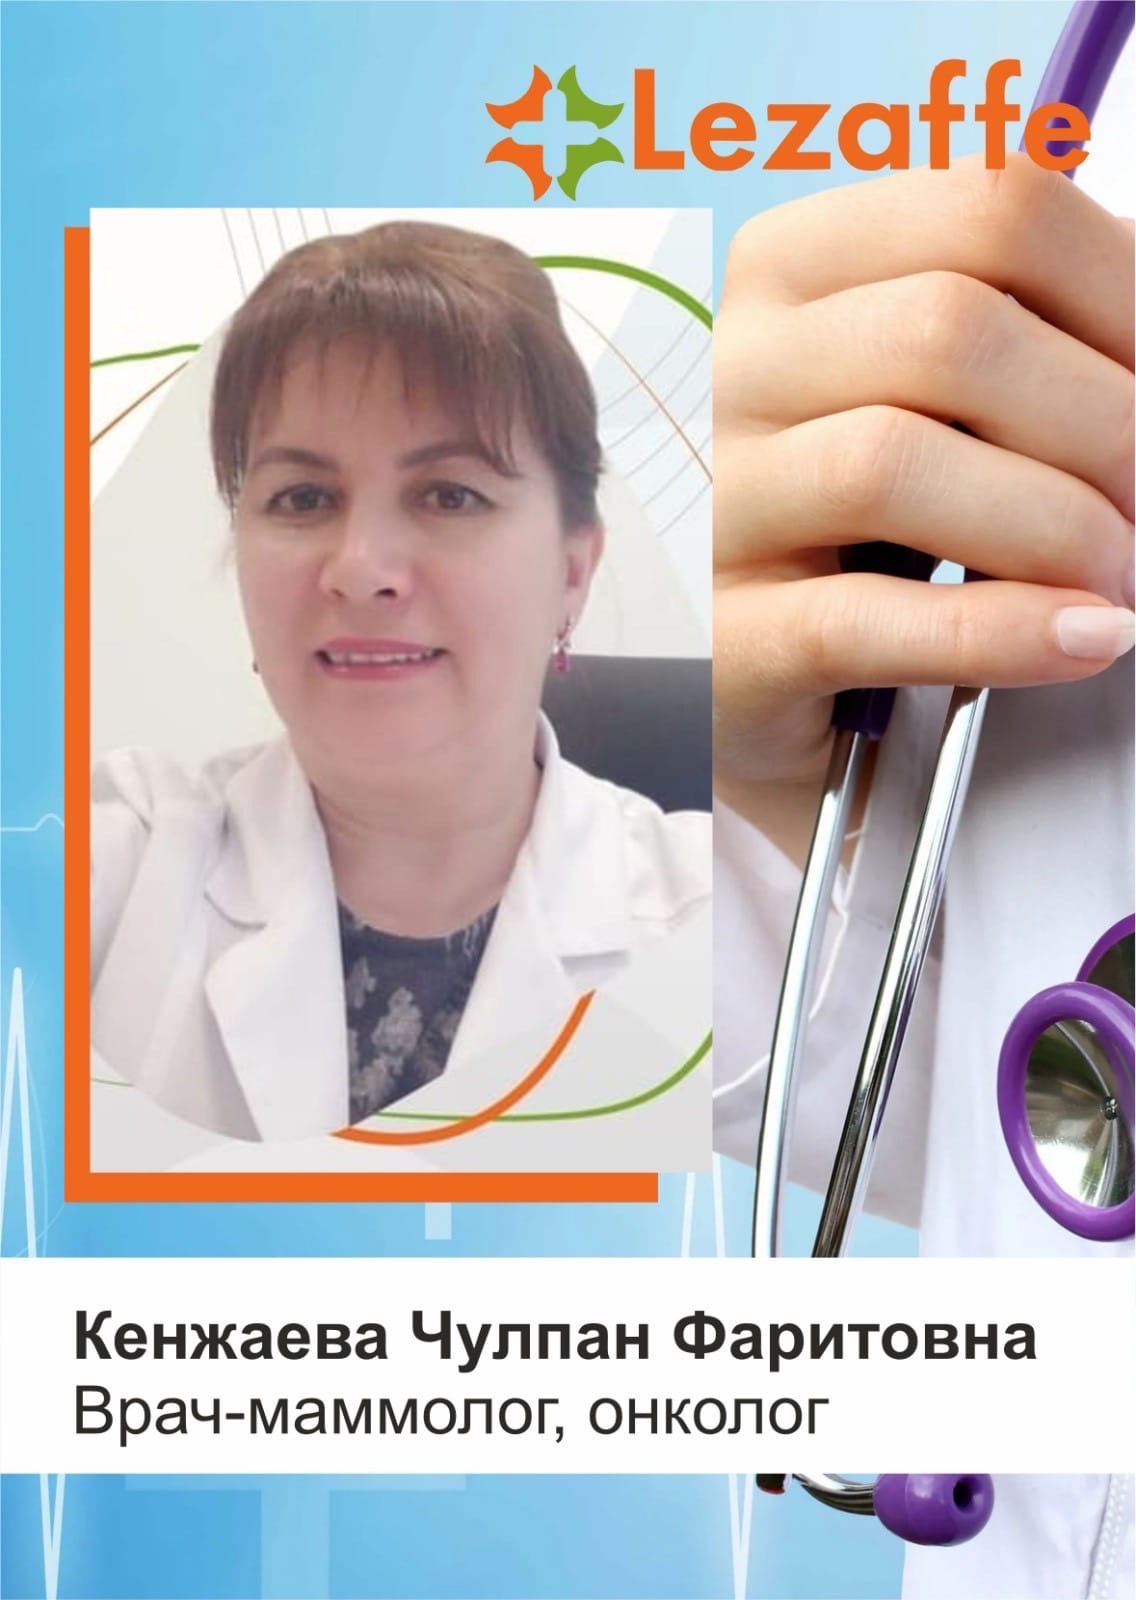 Кенжаева Чулпан Фаритовна, Врач-маммолог, онколог в клинике Lezaffe г. Нягань